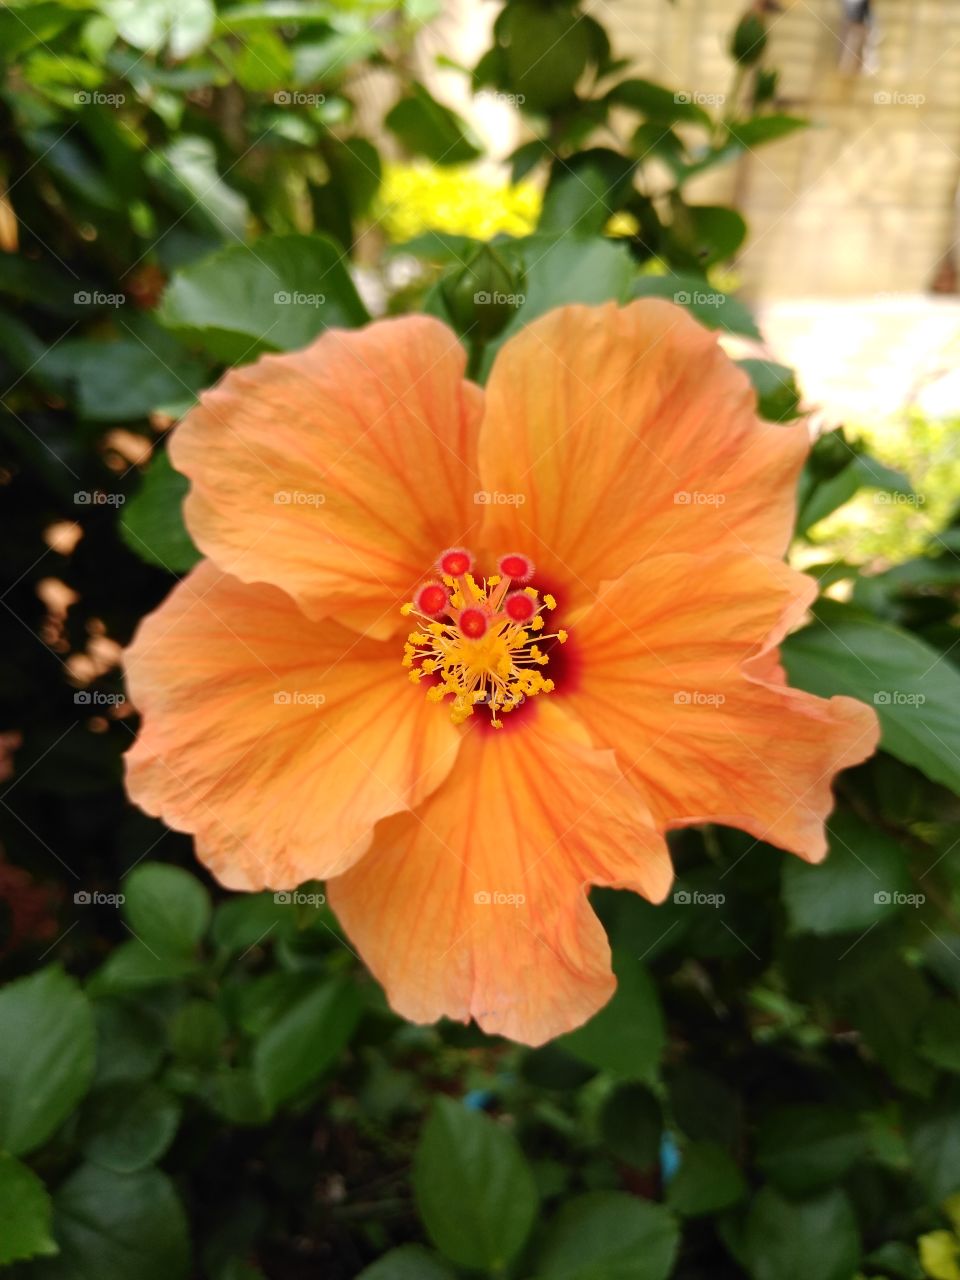 a beautiful orange hibiscus flower in my garden